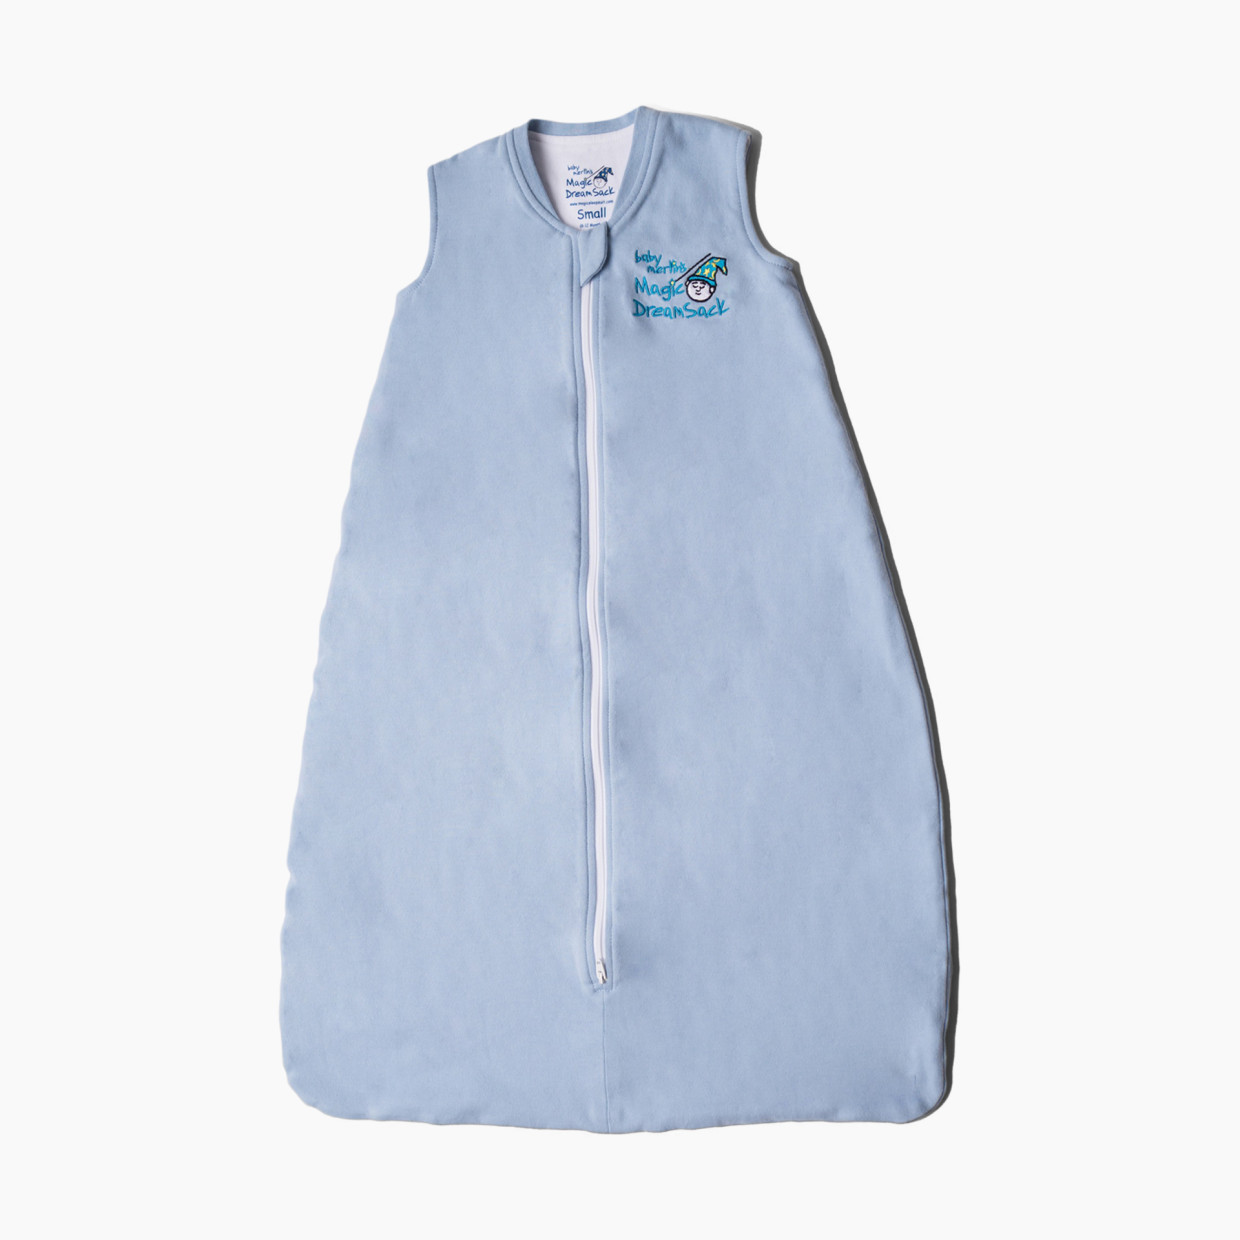 Baby Merlin's Magic Sleepsuit Cotton Dream Sack - Blue, 6-12 Months.